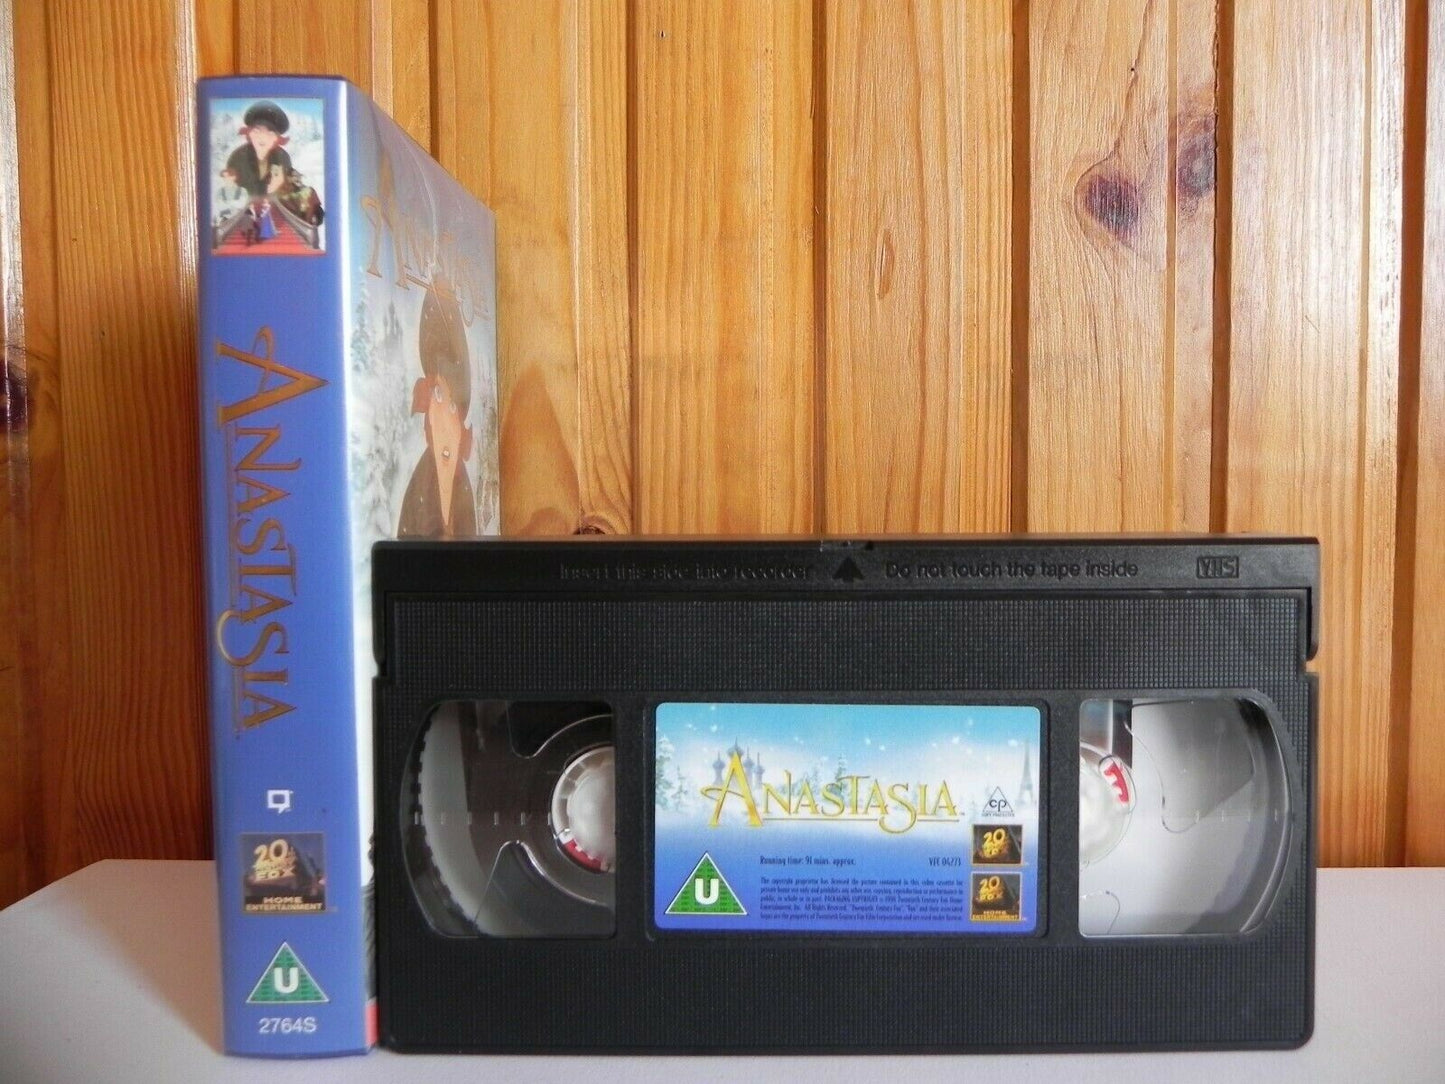 Anastasia - 20th Century - Animated - Adventure - Thrilling Story - Kids - VHS-